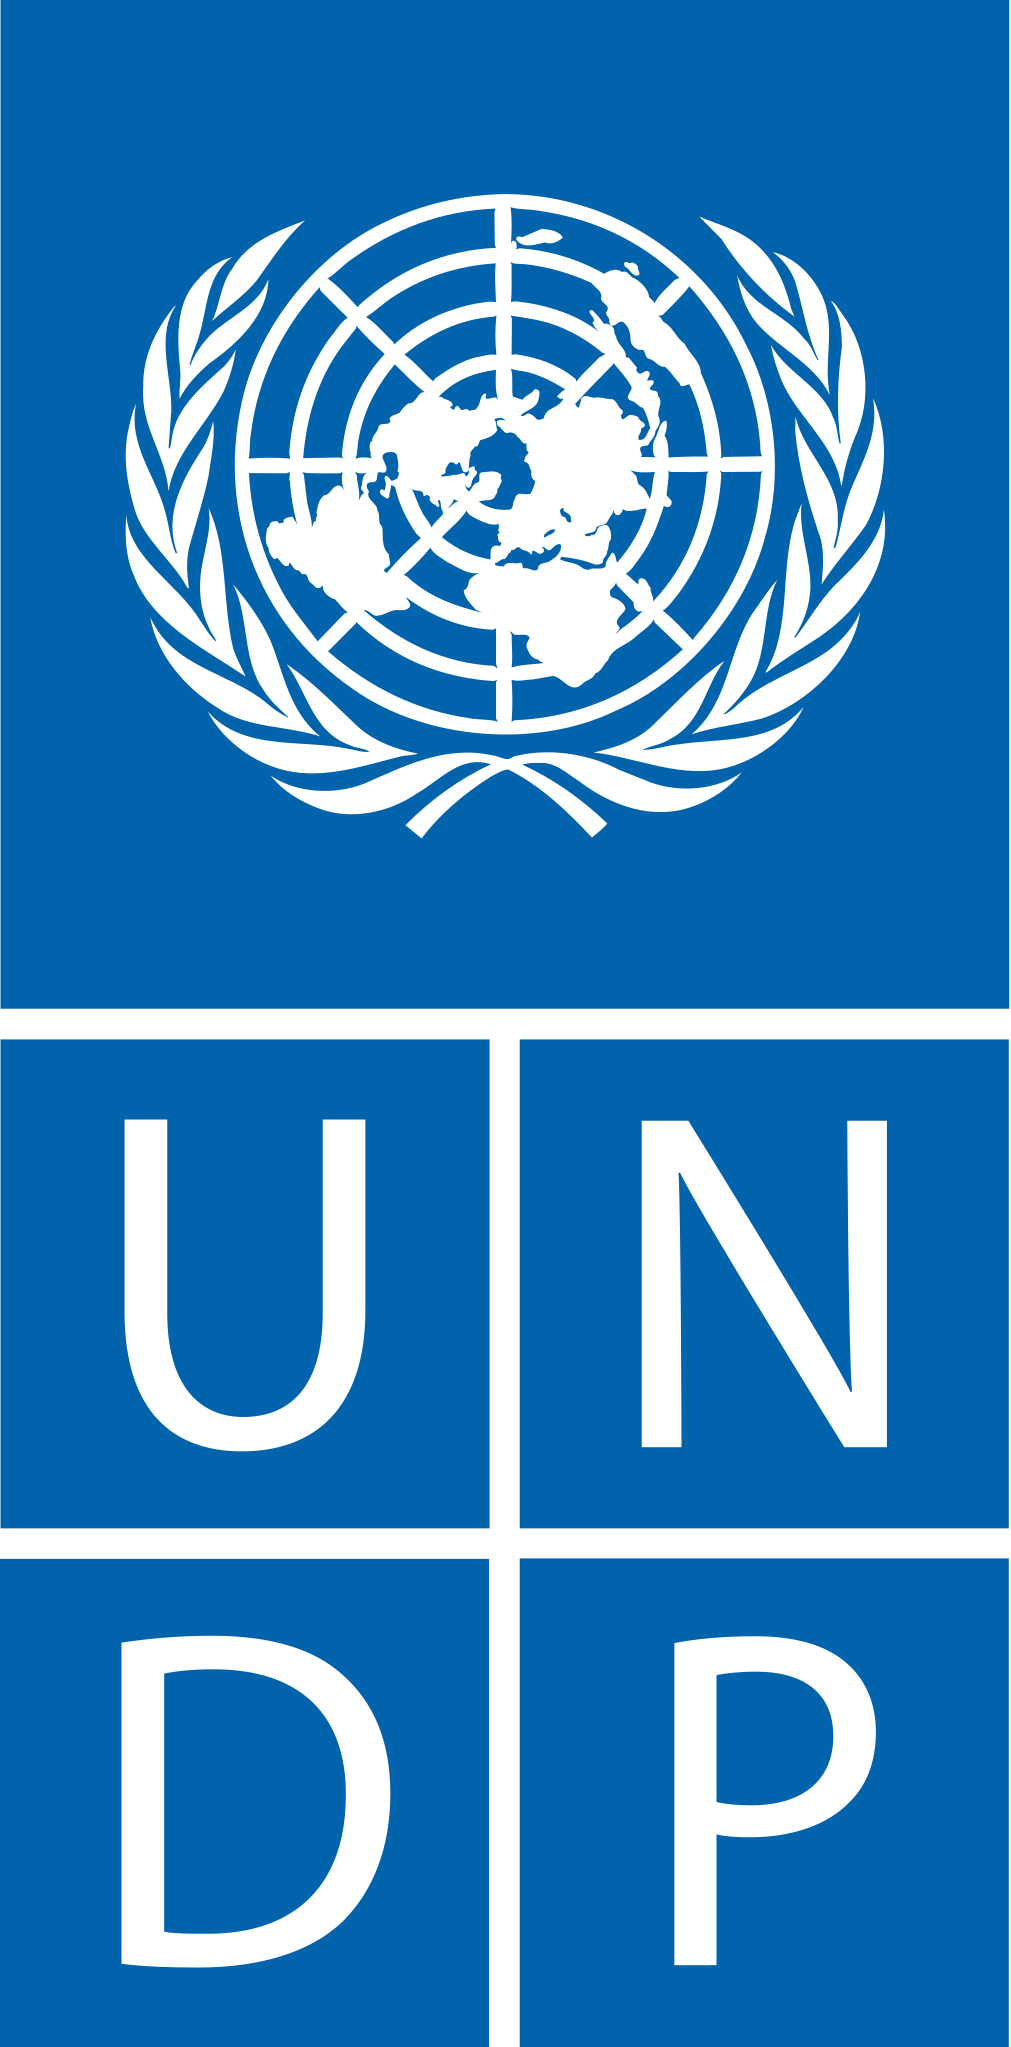 UNDP_logo.svg